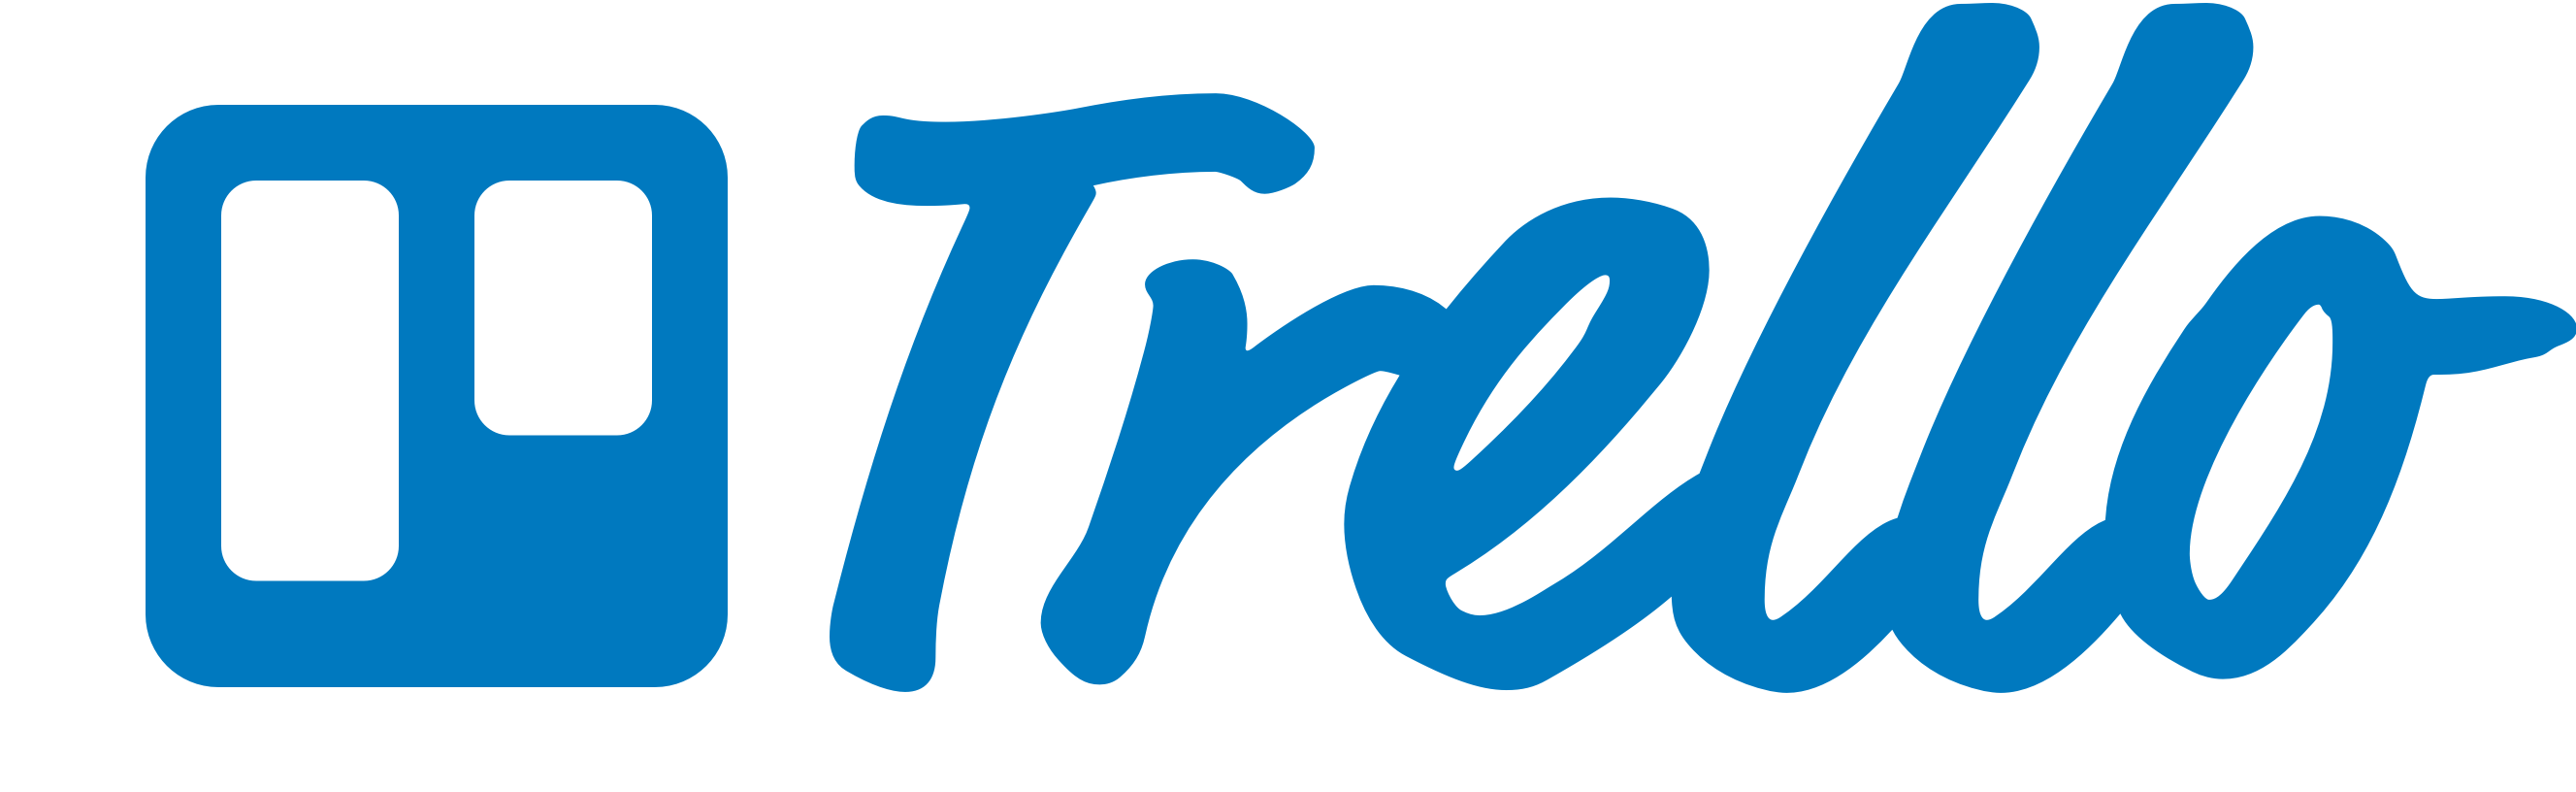 Trebutra - Trello Bug Tracker